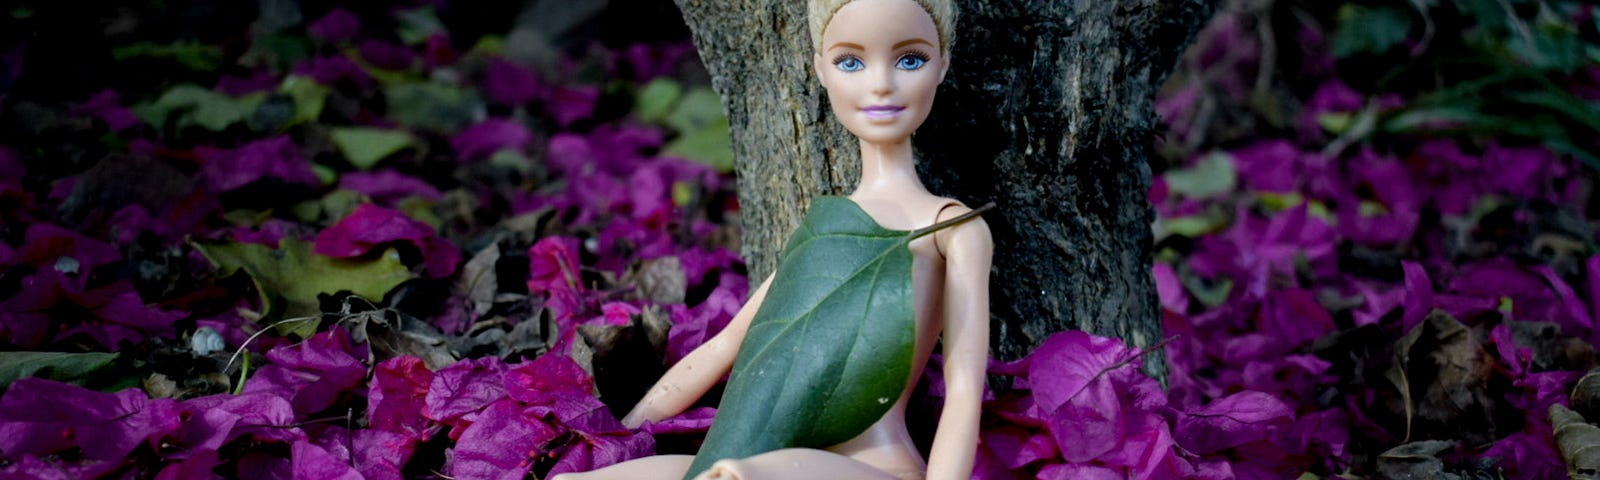 Barbie Doll Under a Tree